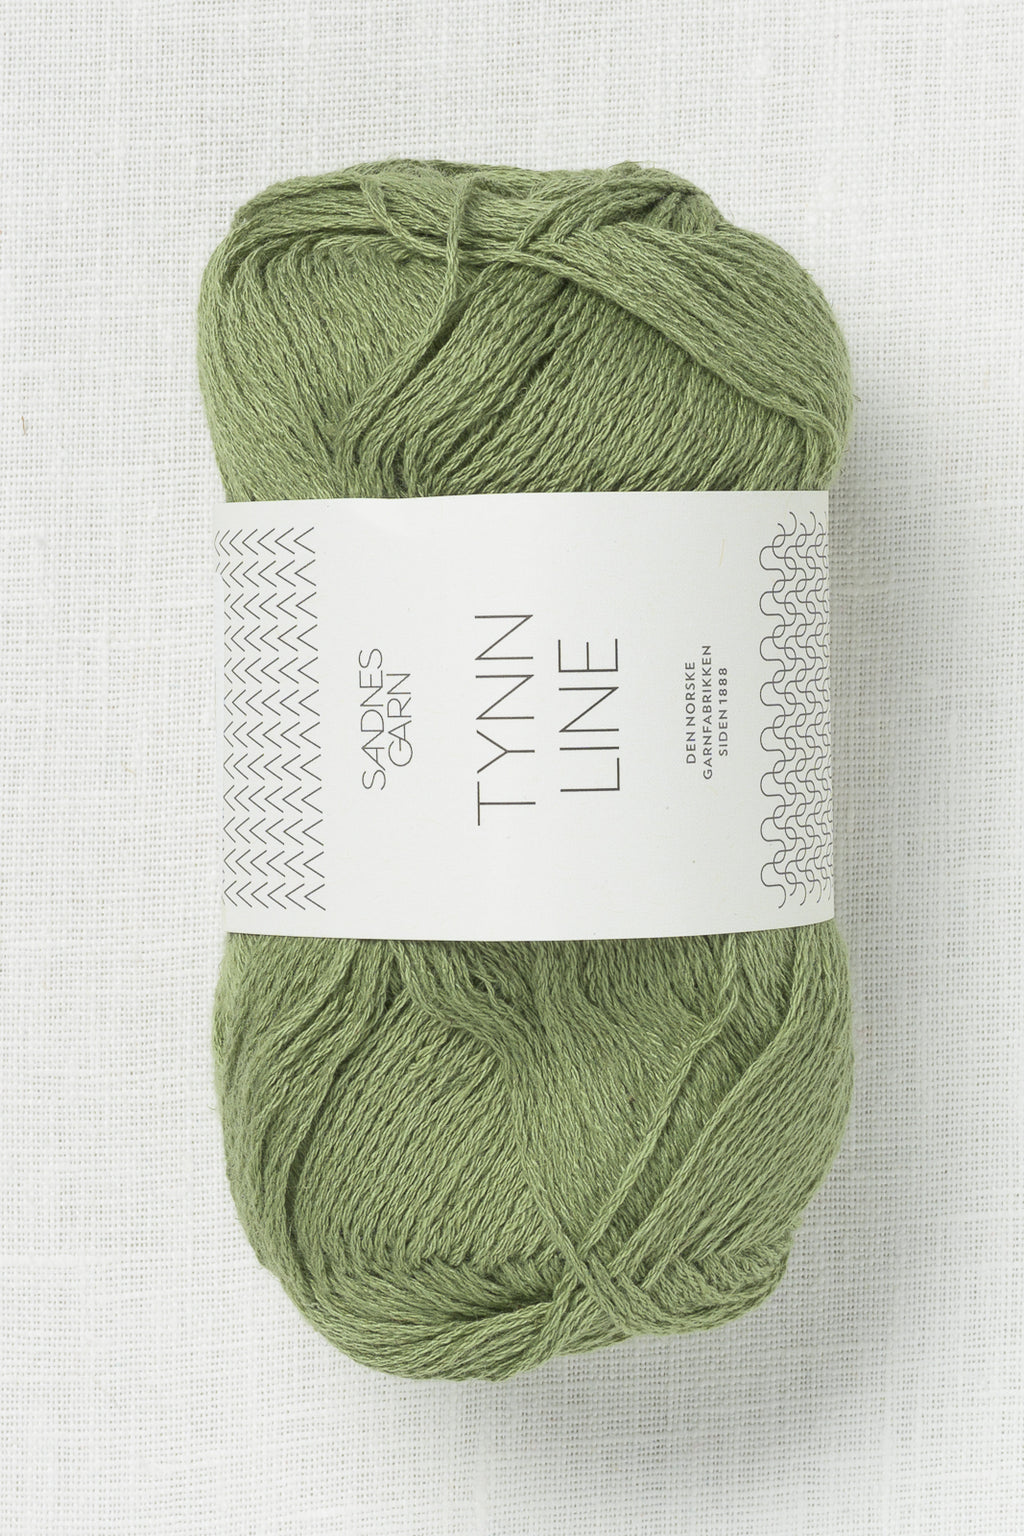 Tynn Line (Linen & cotton) yarn by Sandnes Garn